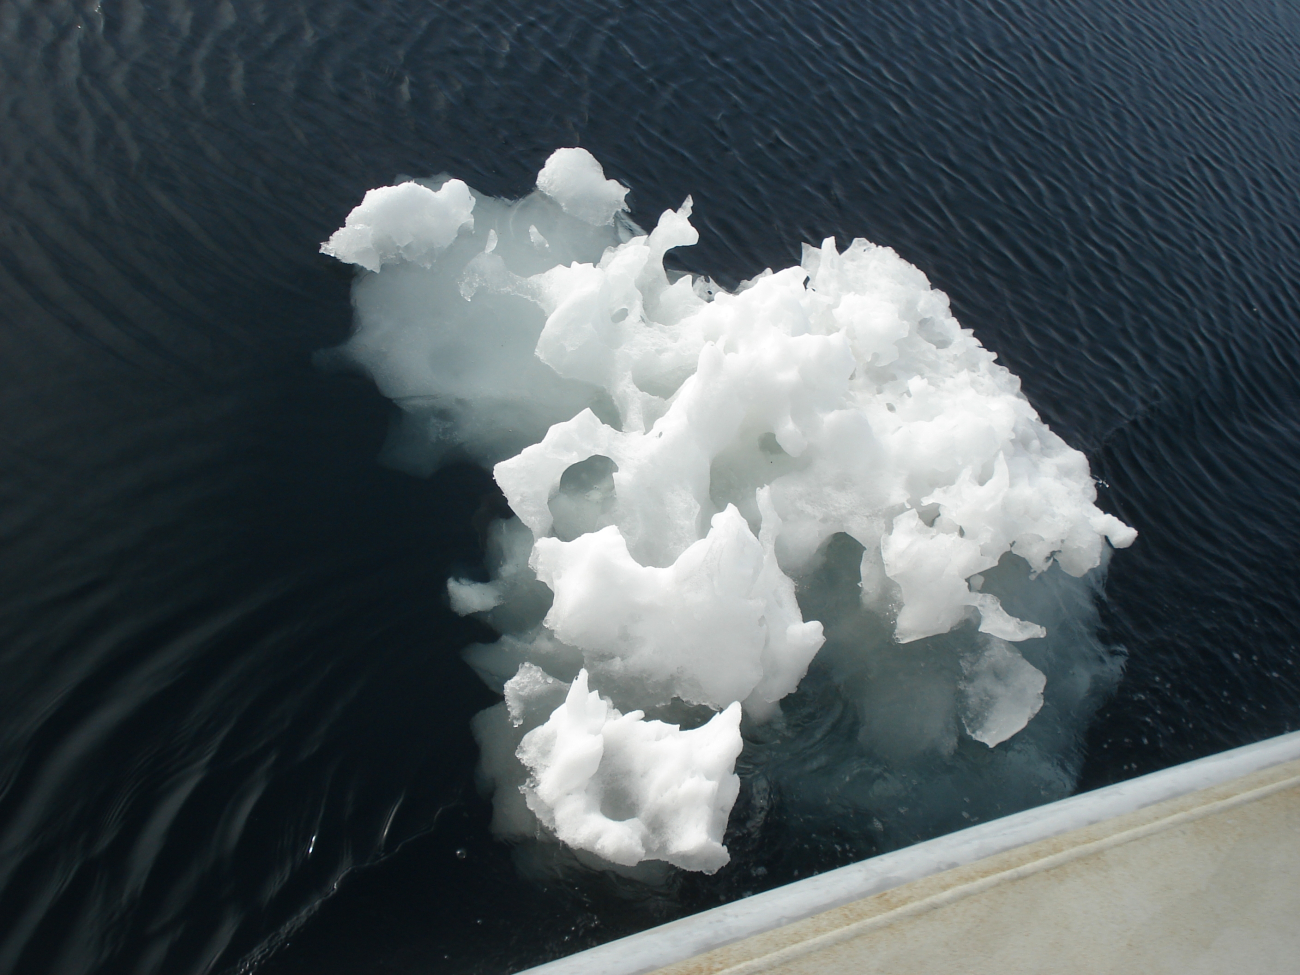 Small iceberg melting in fantastic shapes